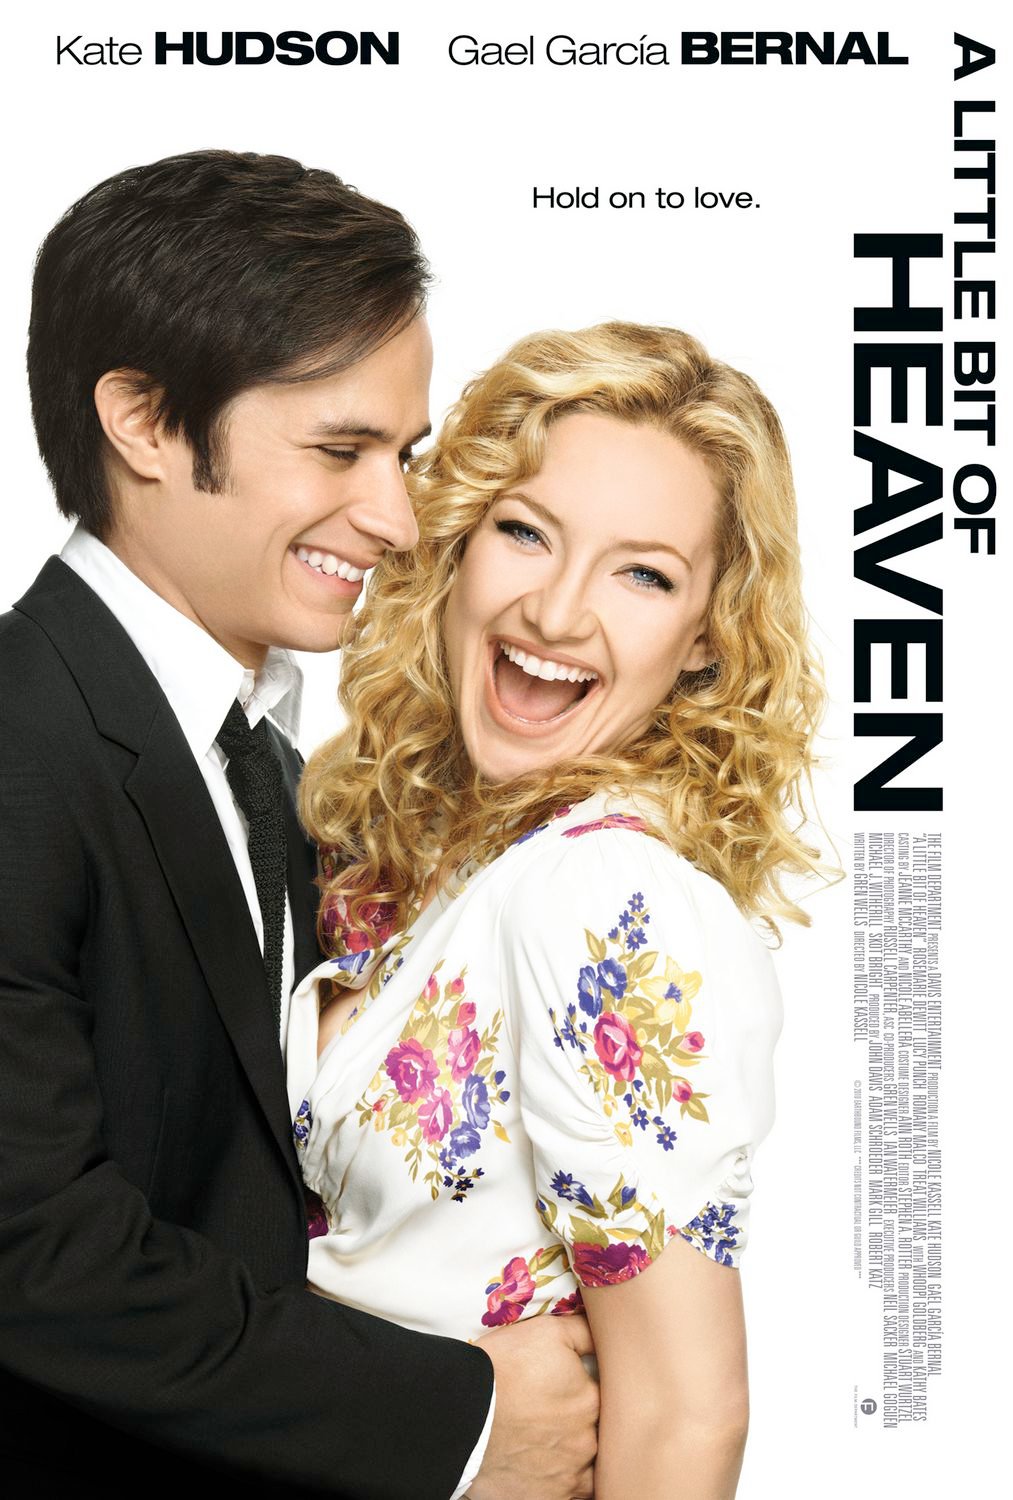 Poster of Millennium Entertainment's A Little Bit of Heaven (2012)